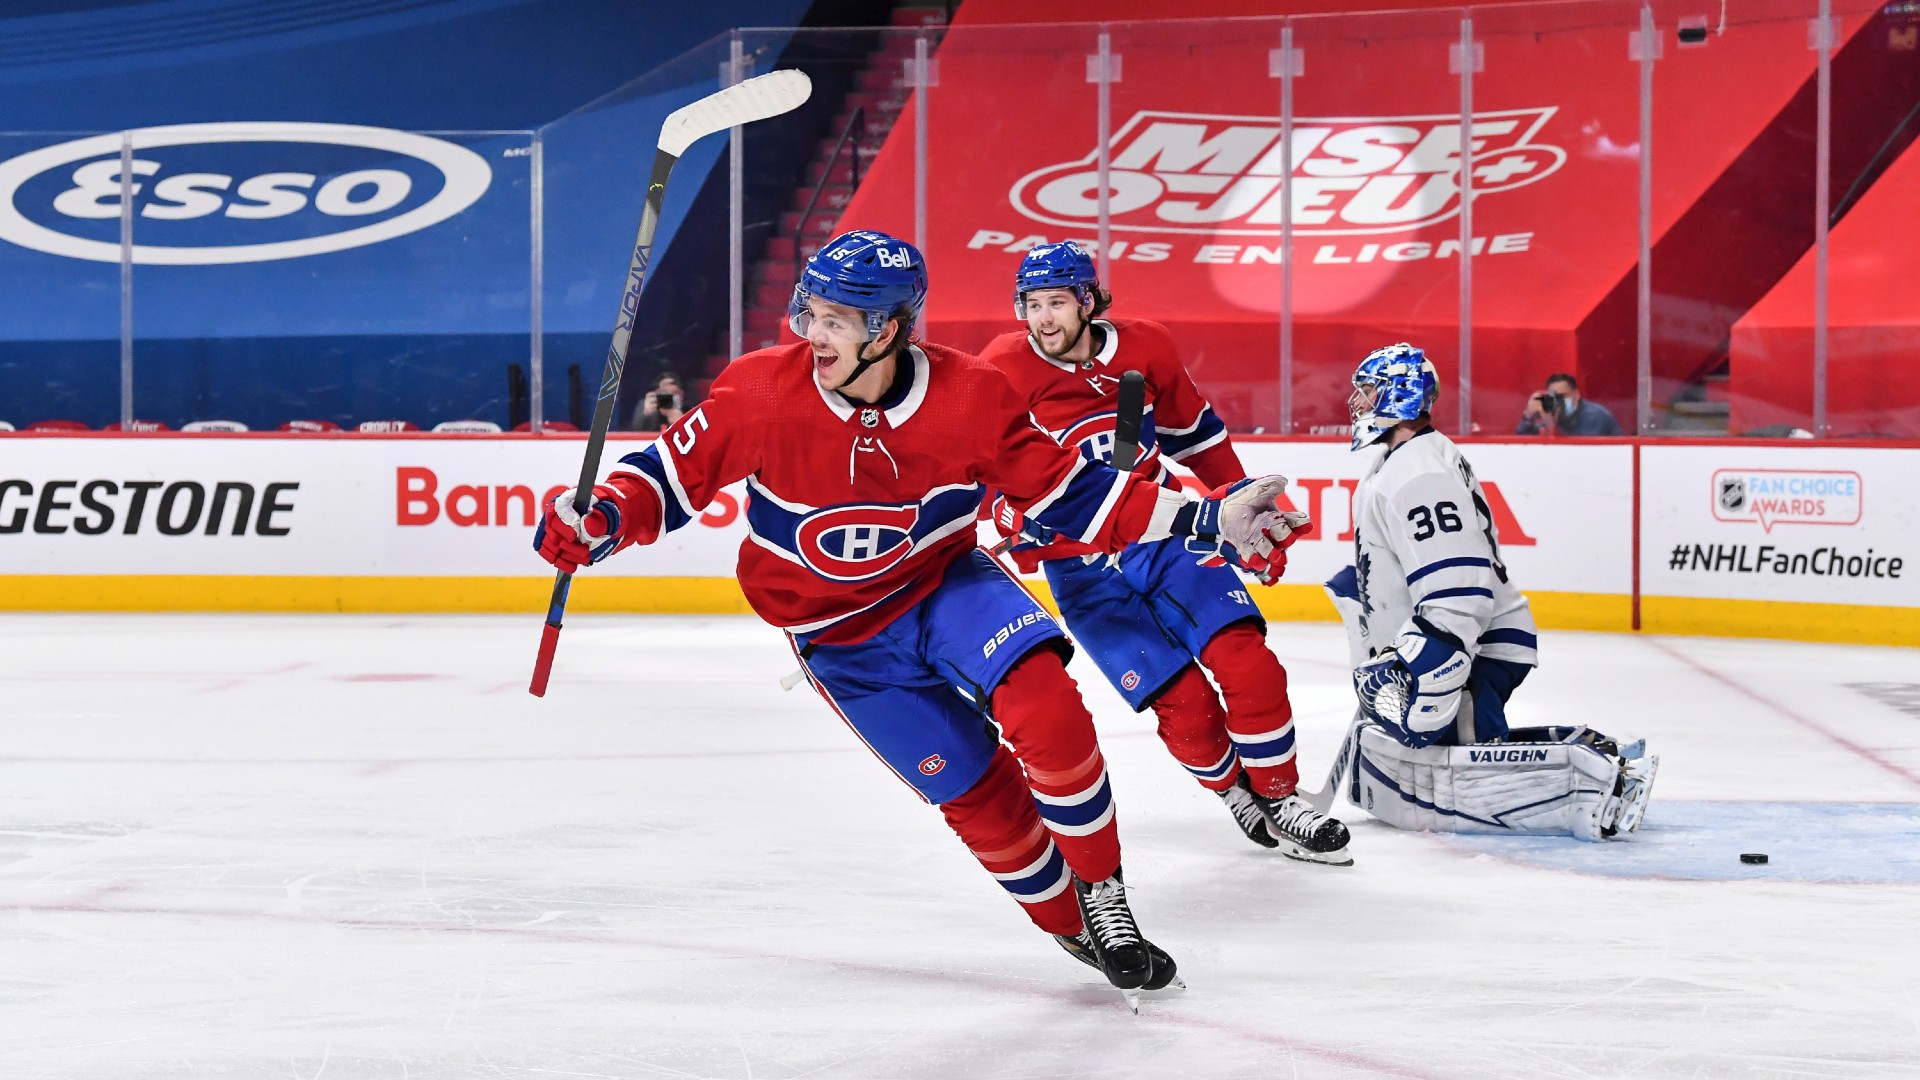 Maple Leafs vs. Canadiens score, results: Jesperi Kotkaniemi scores in OT, sends series to Game 7 - Sporting News